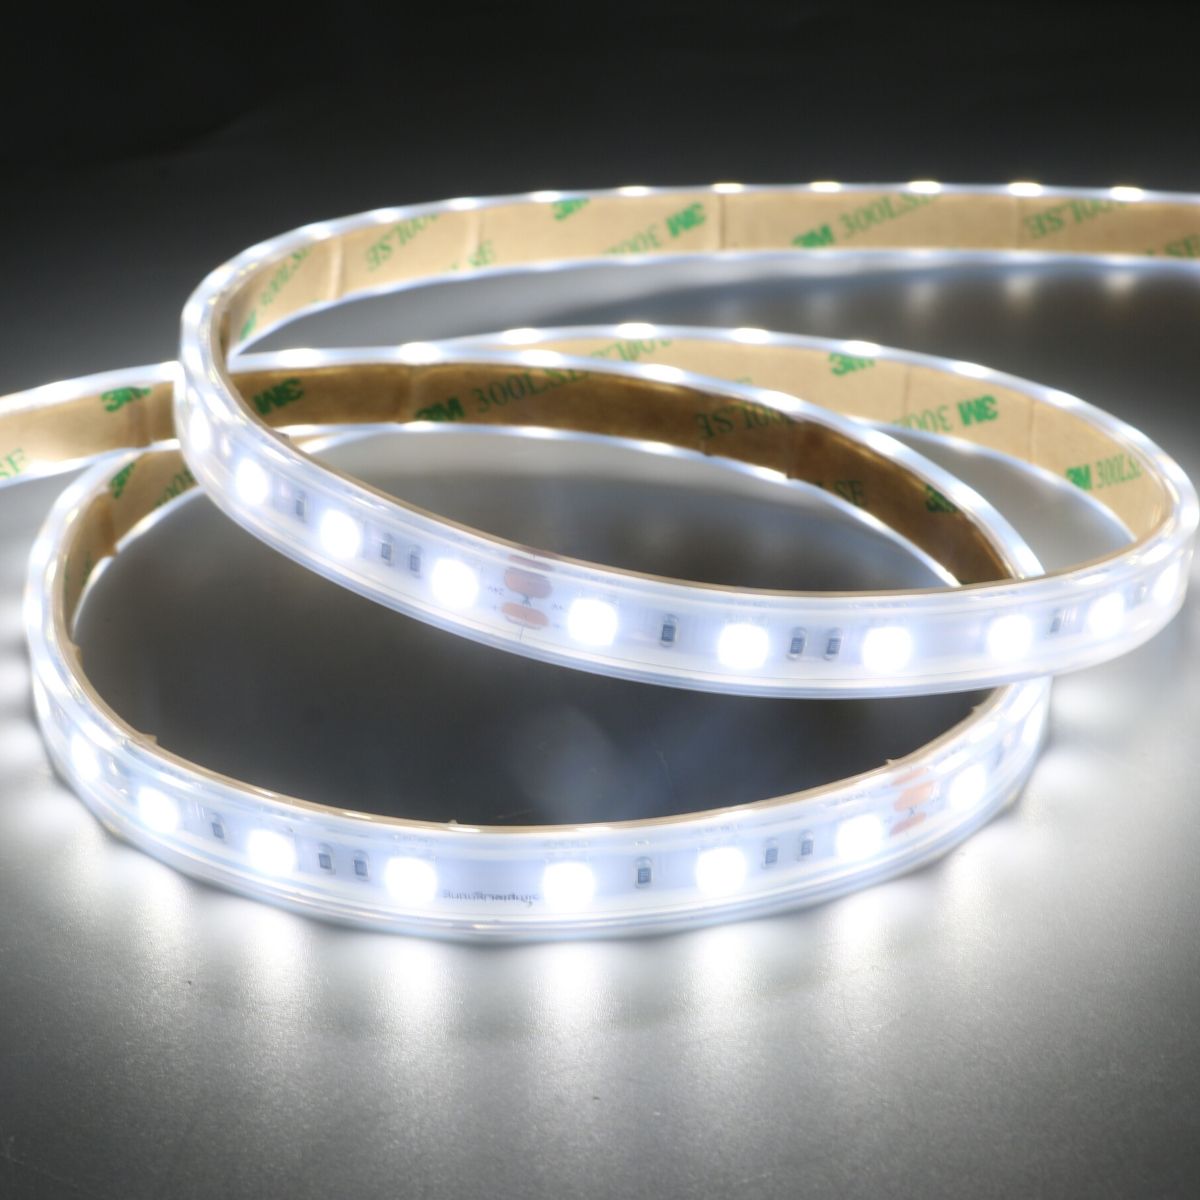 View Cool White 12v LED Strip Lights LED Supplier information